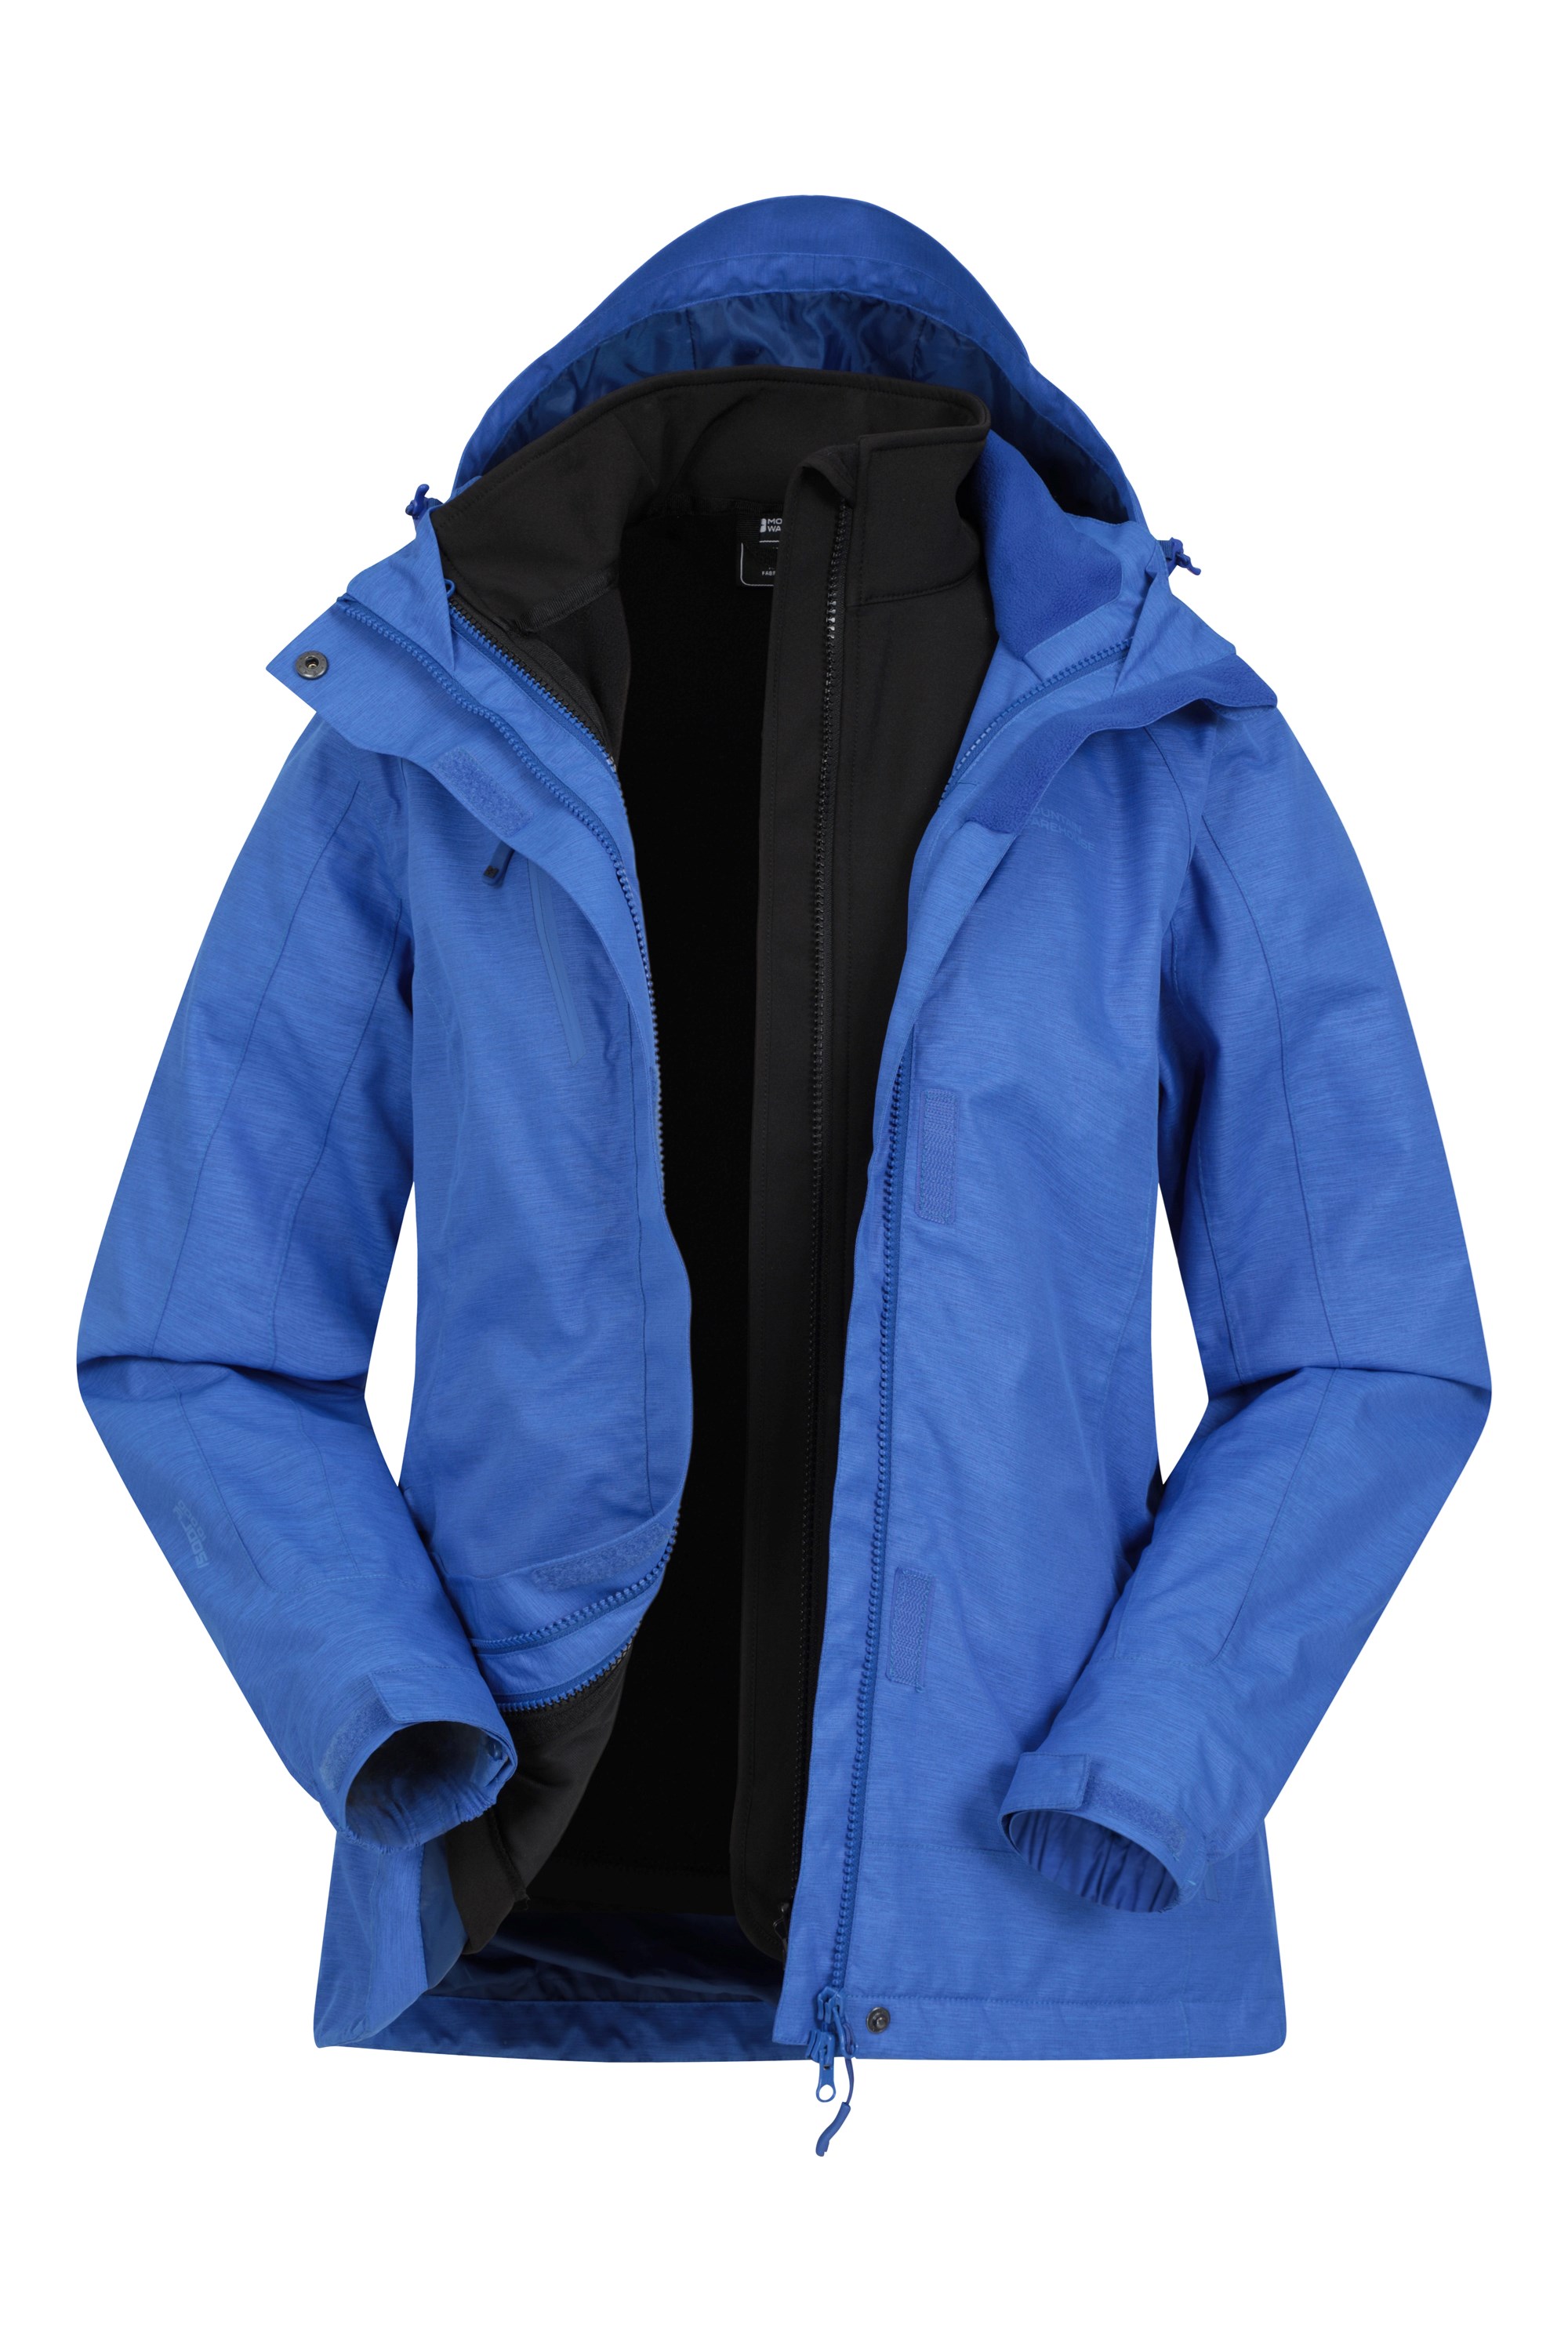 Breathable Rain Jacket for Winter Detachable Hood Mountain Warehouse Bracken Extreme Womens 3 in 1 Waterproof Jacket Thermal Tested Raincoat Camping & Walking Black 26 